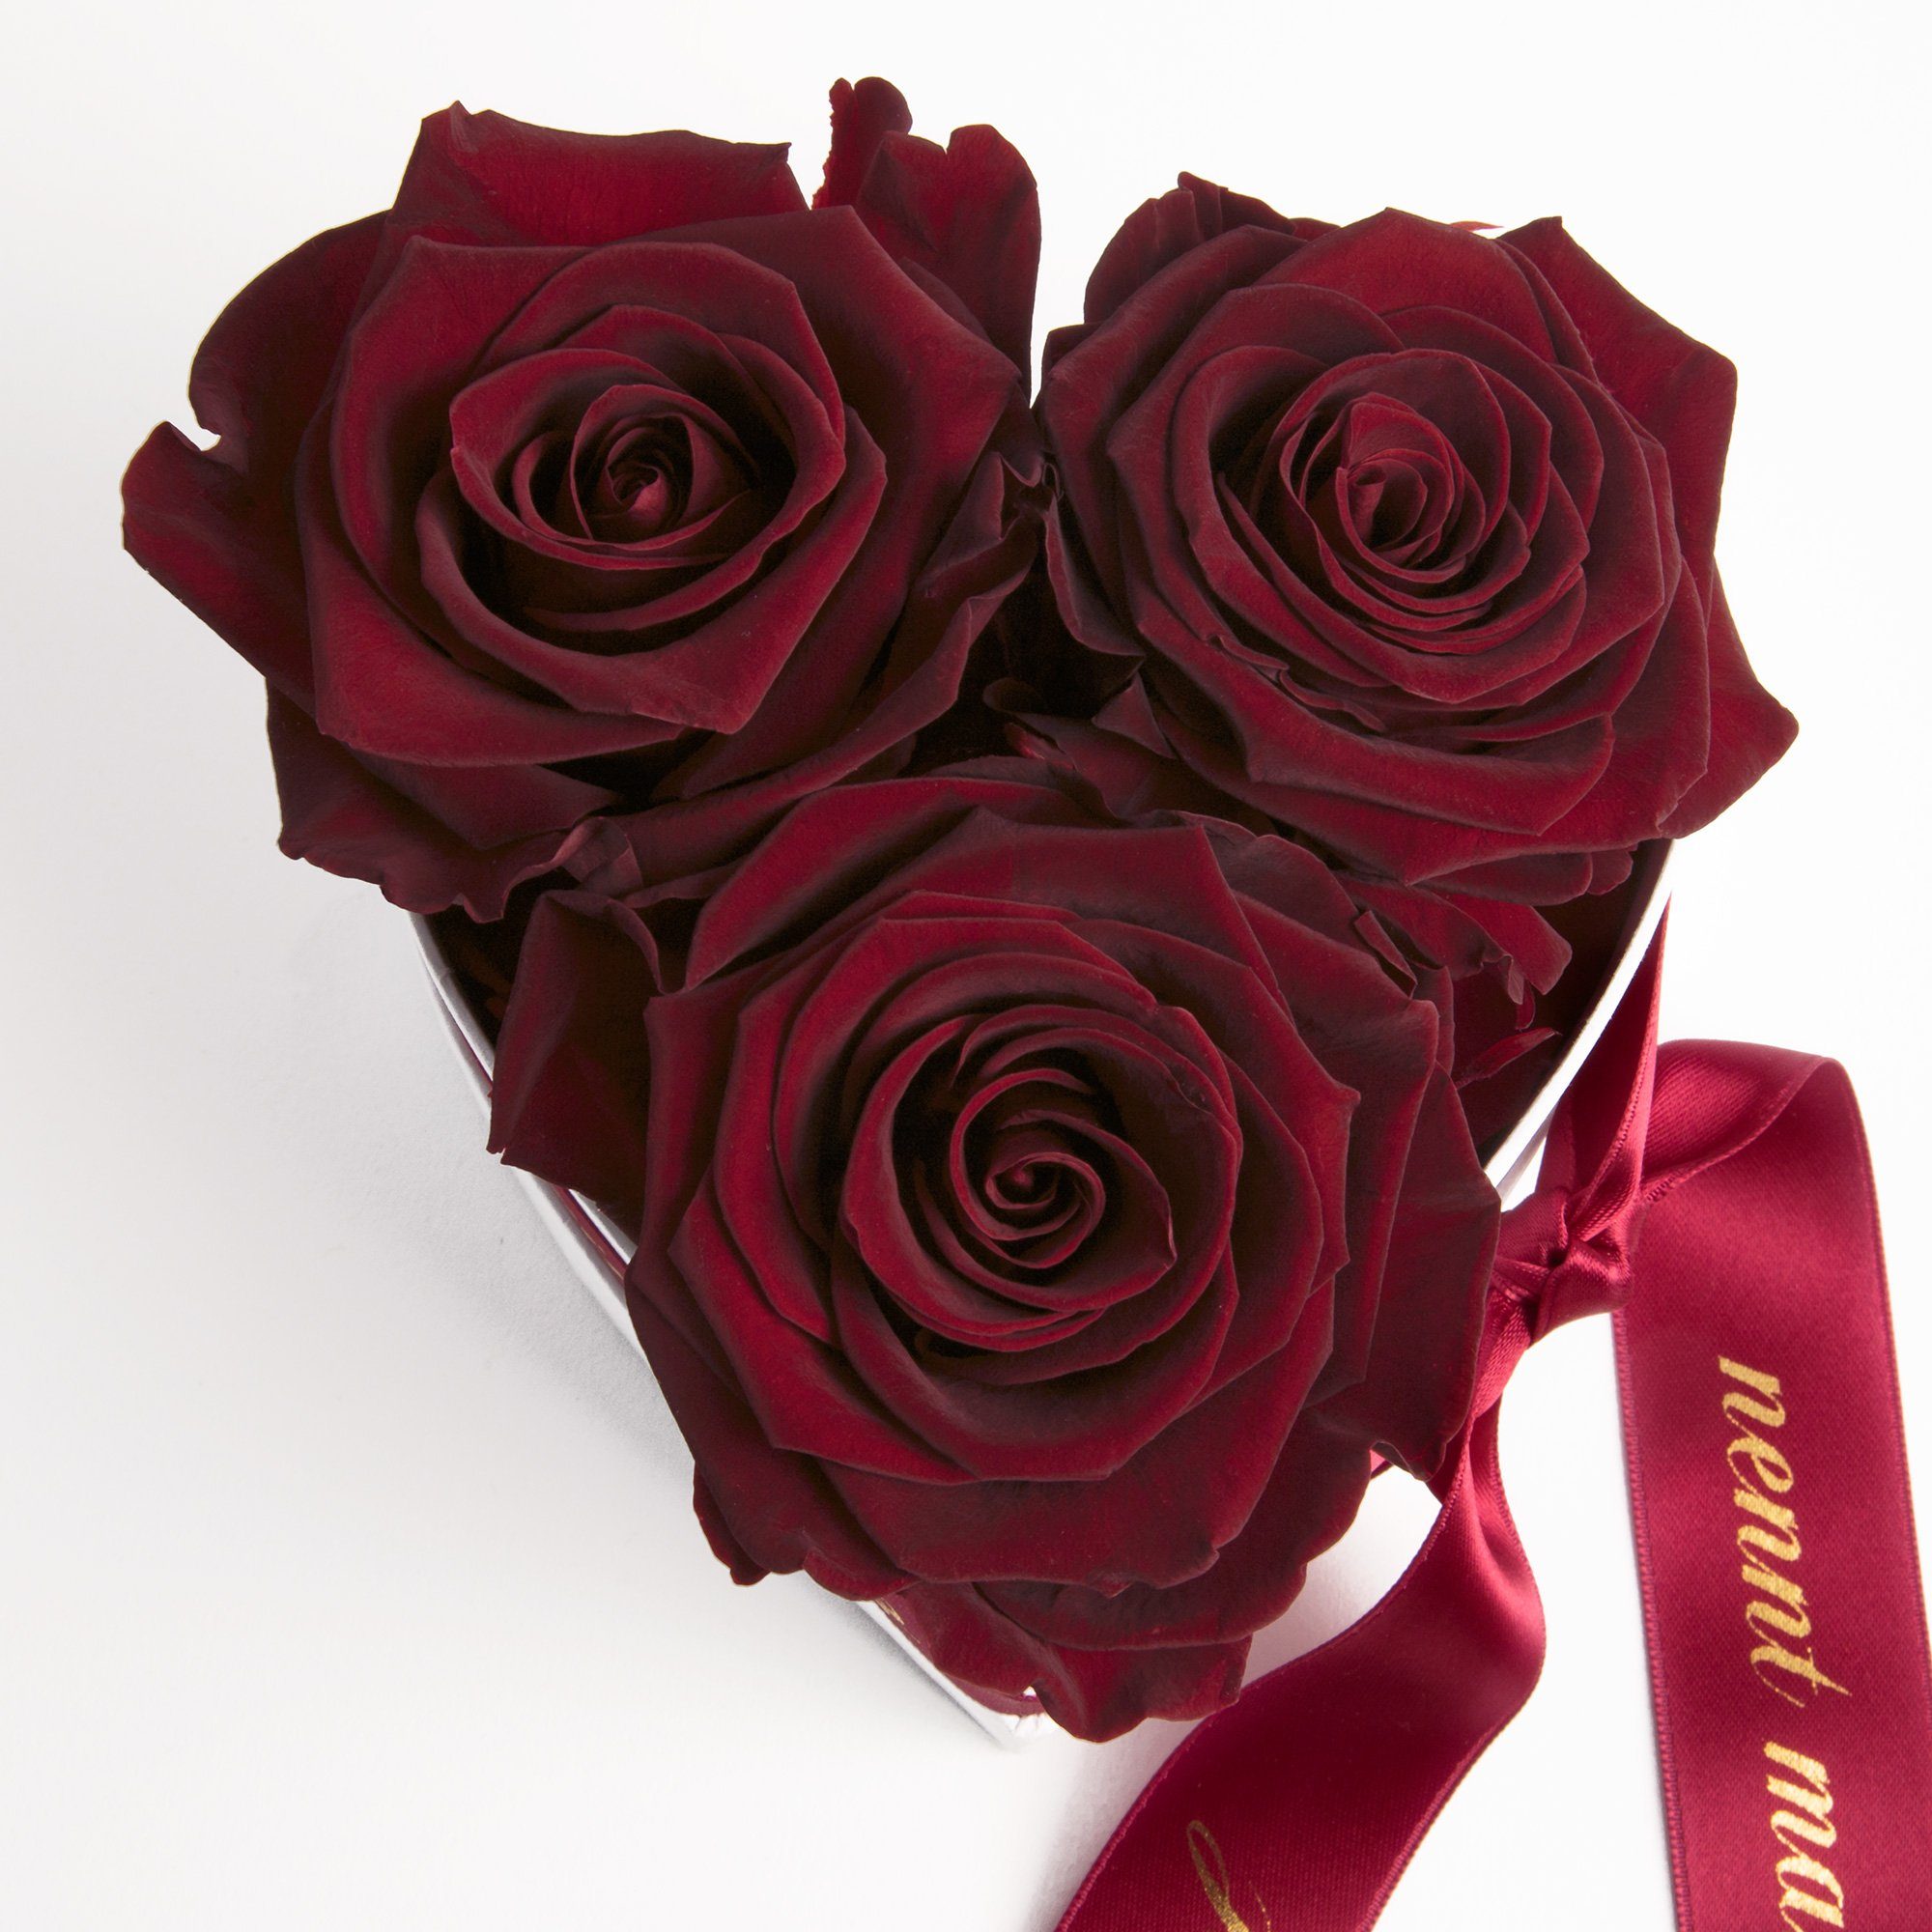 cm, nennt 10 Kunstblume Engel Höhe Rosenbox konserviert Rosen Bordeaux Rosen man ohne ROSEMARIE lange Heidelberg, SCHULZ Herz 3 Echte Mama Flügel haltbar Rose,